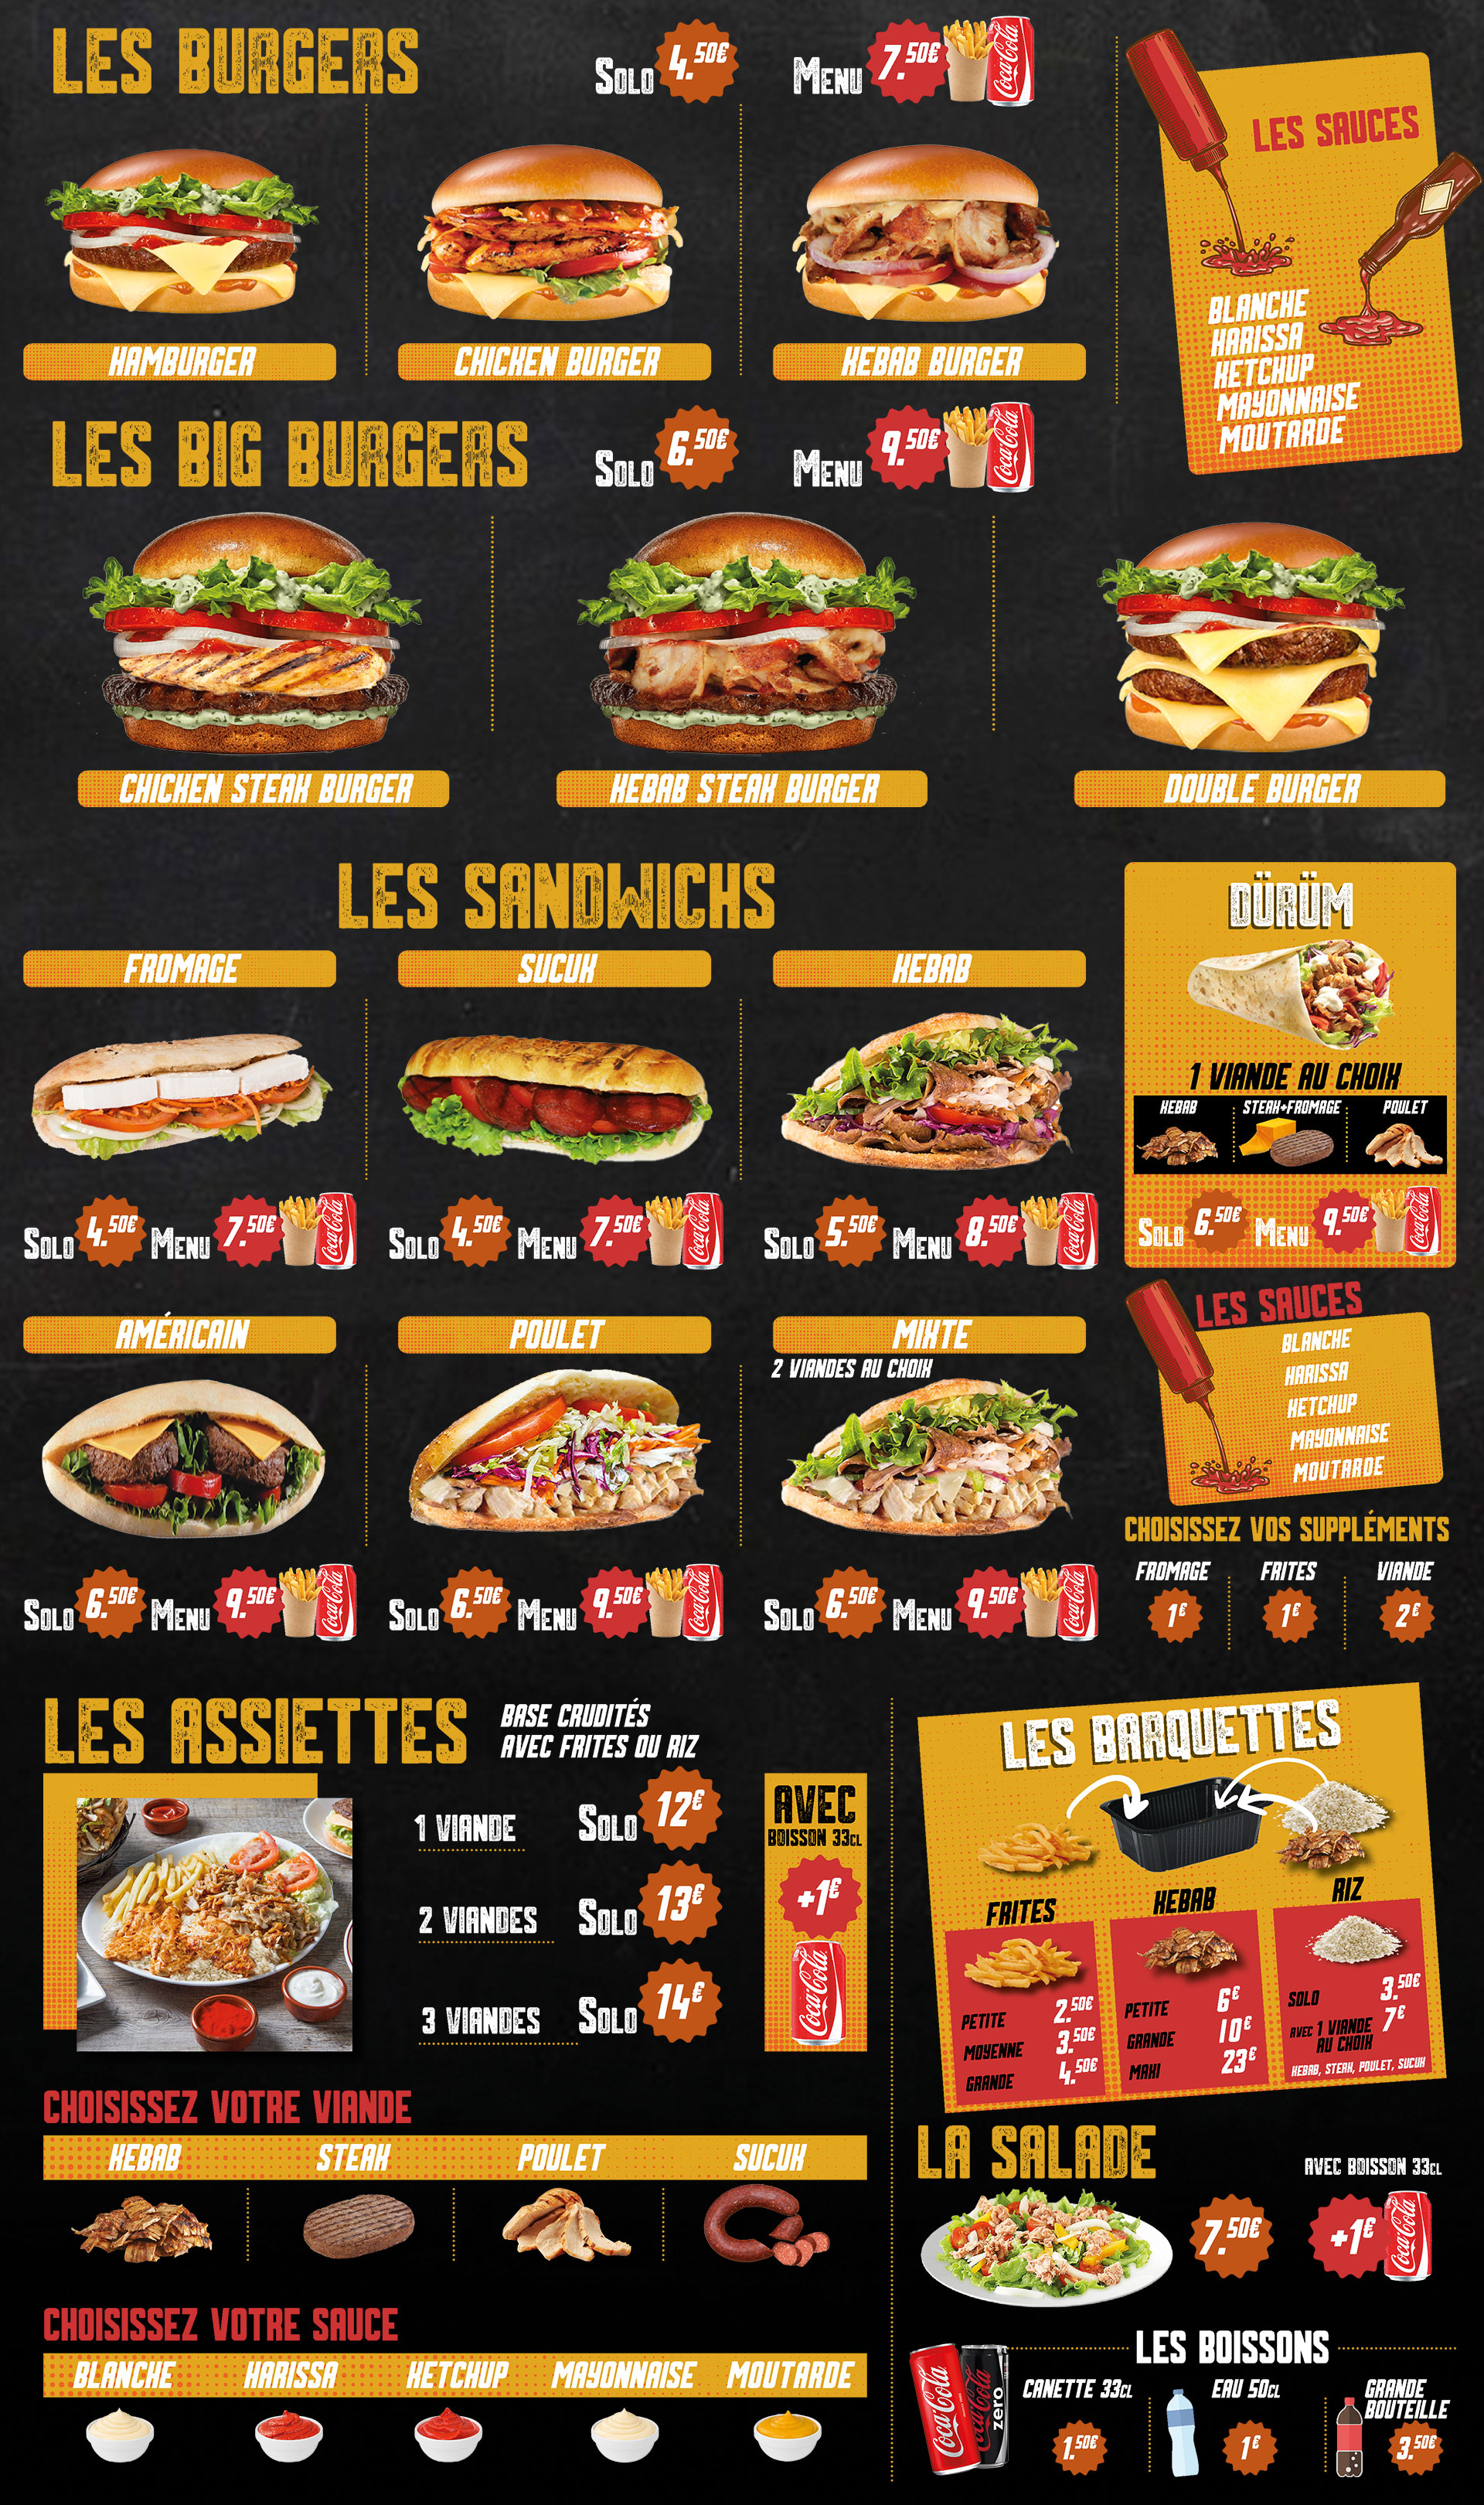 KKdkmdJlJOZ_turan-kebab-menu-pour-scan-menu-291021.jpg